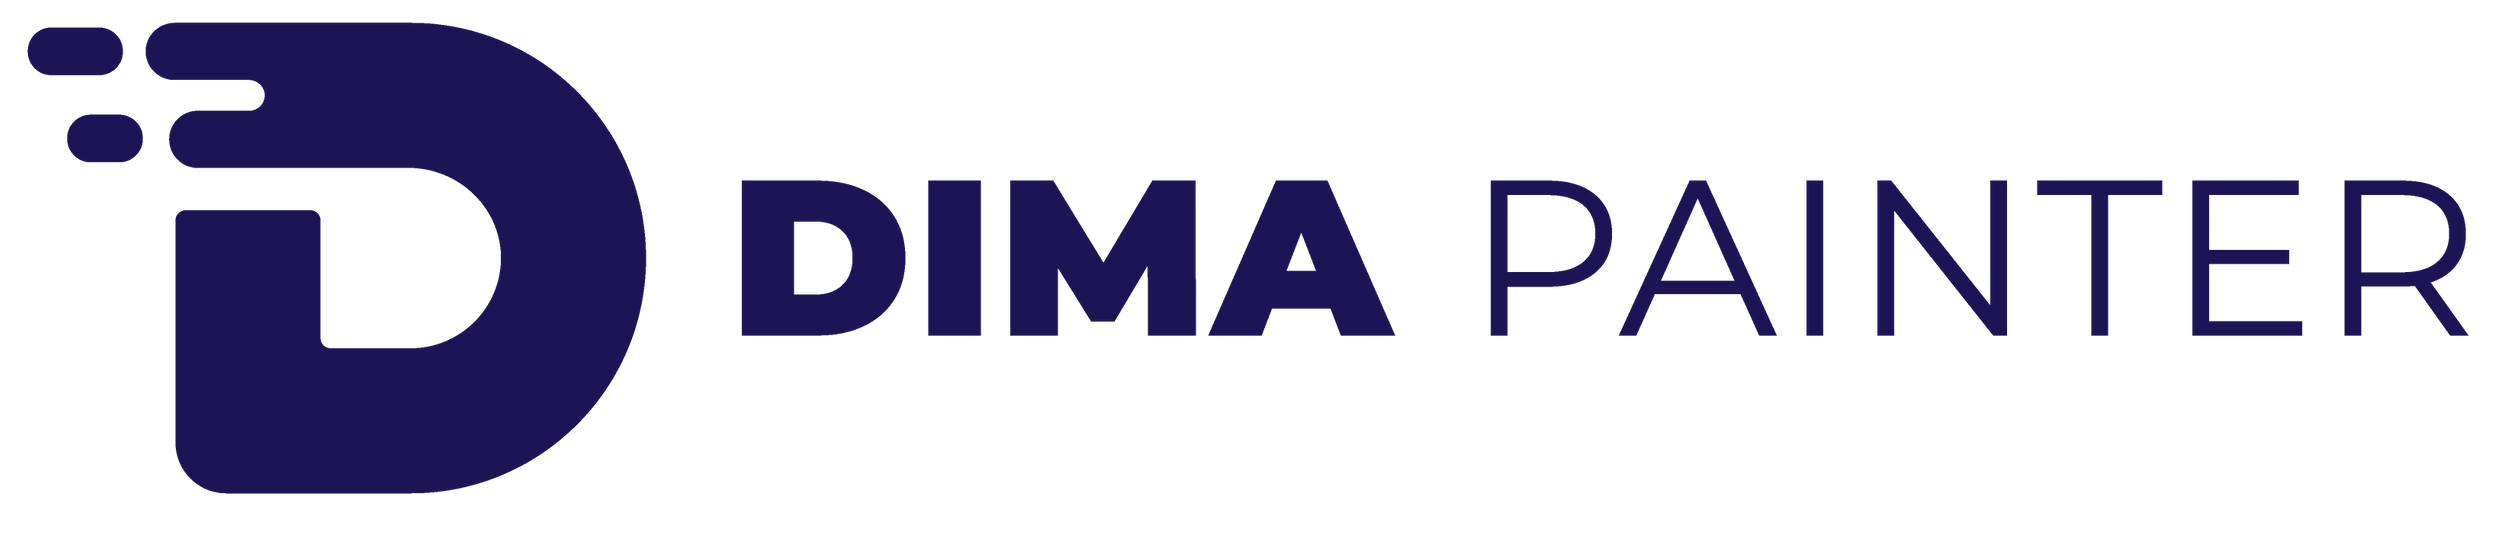 Dima Painter Logo